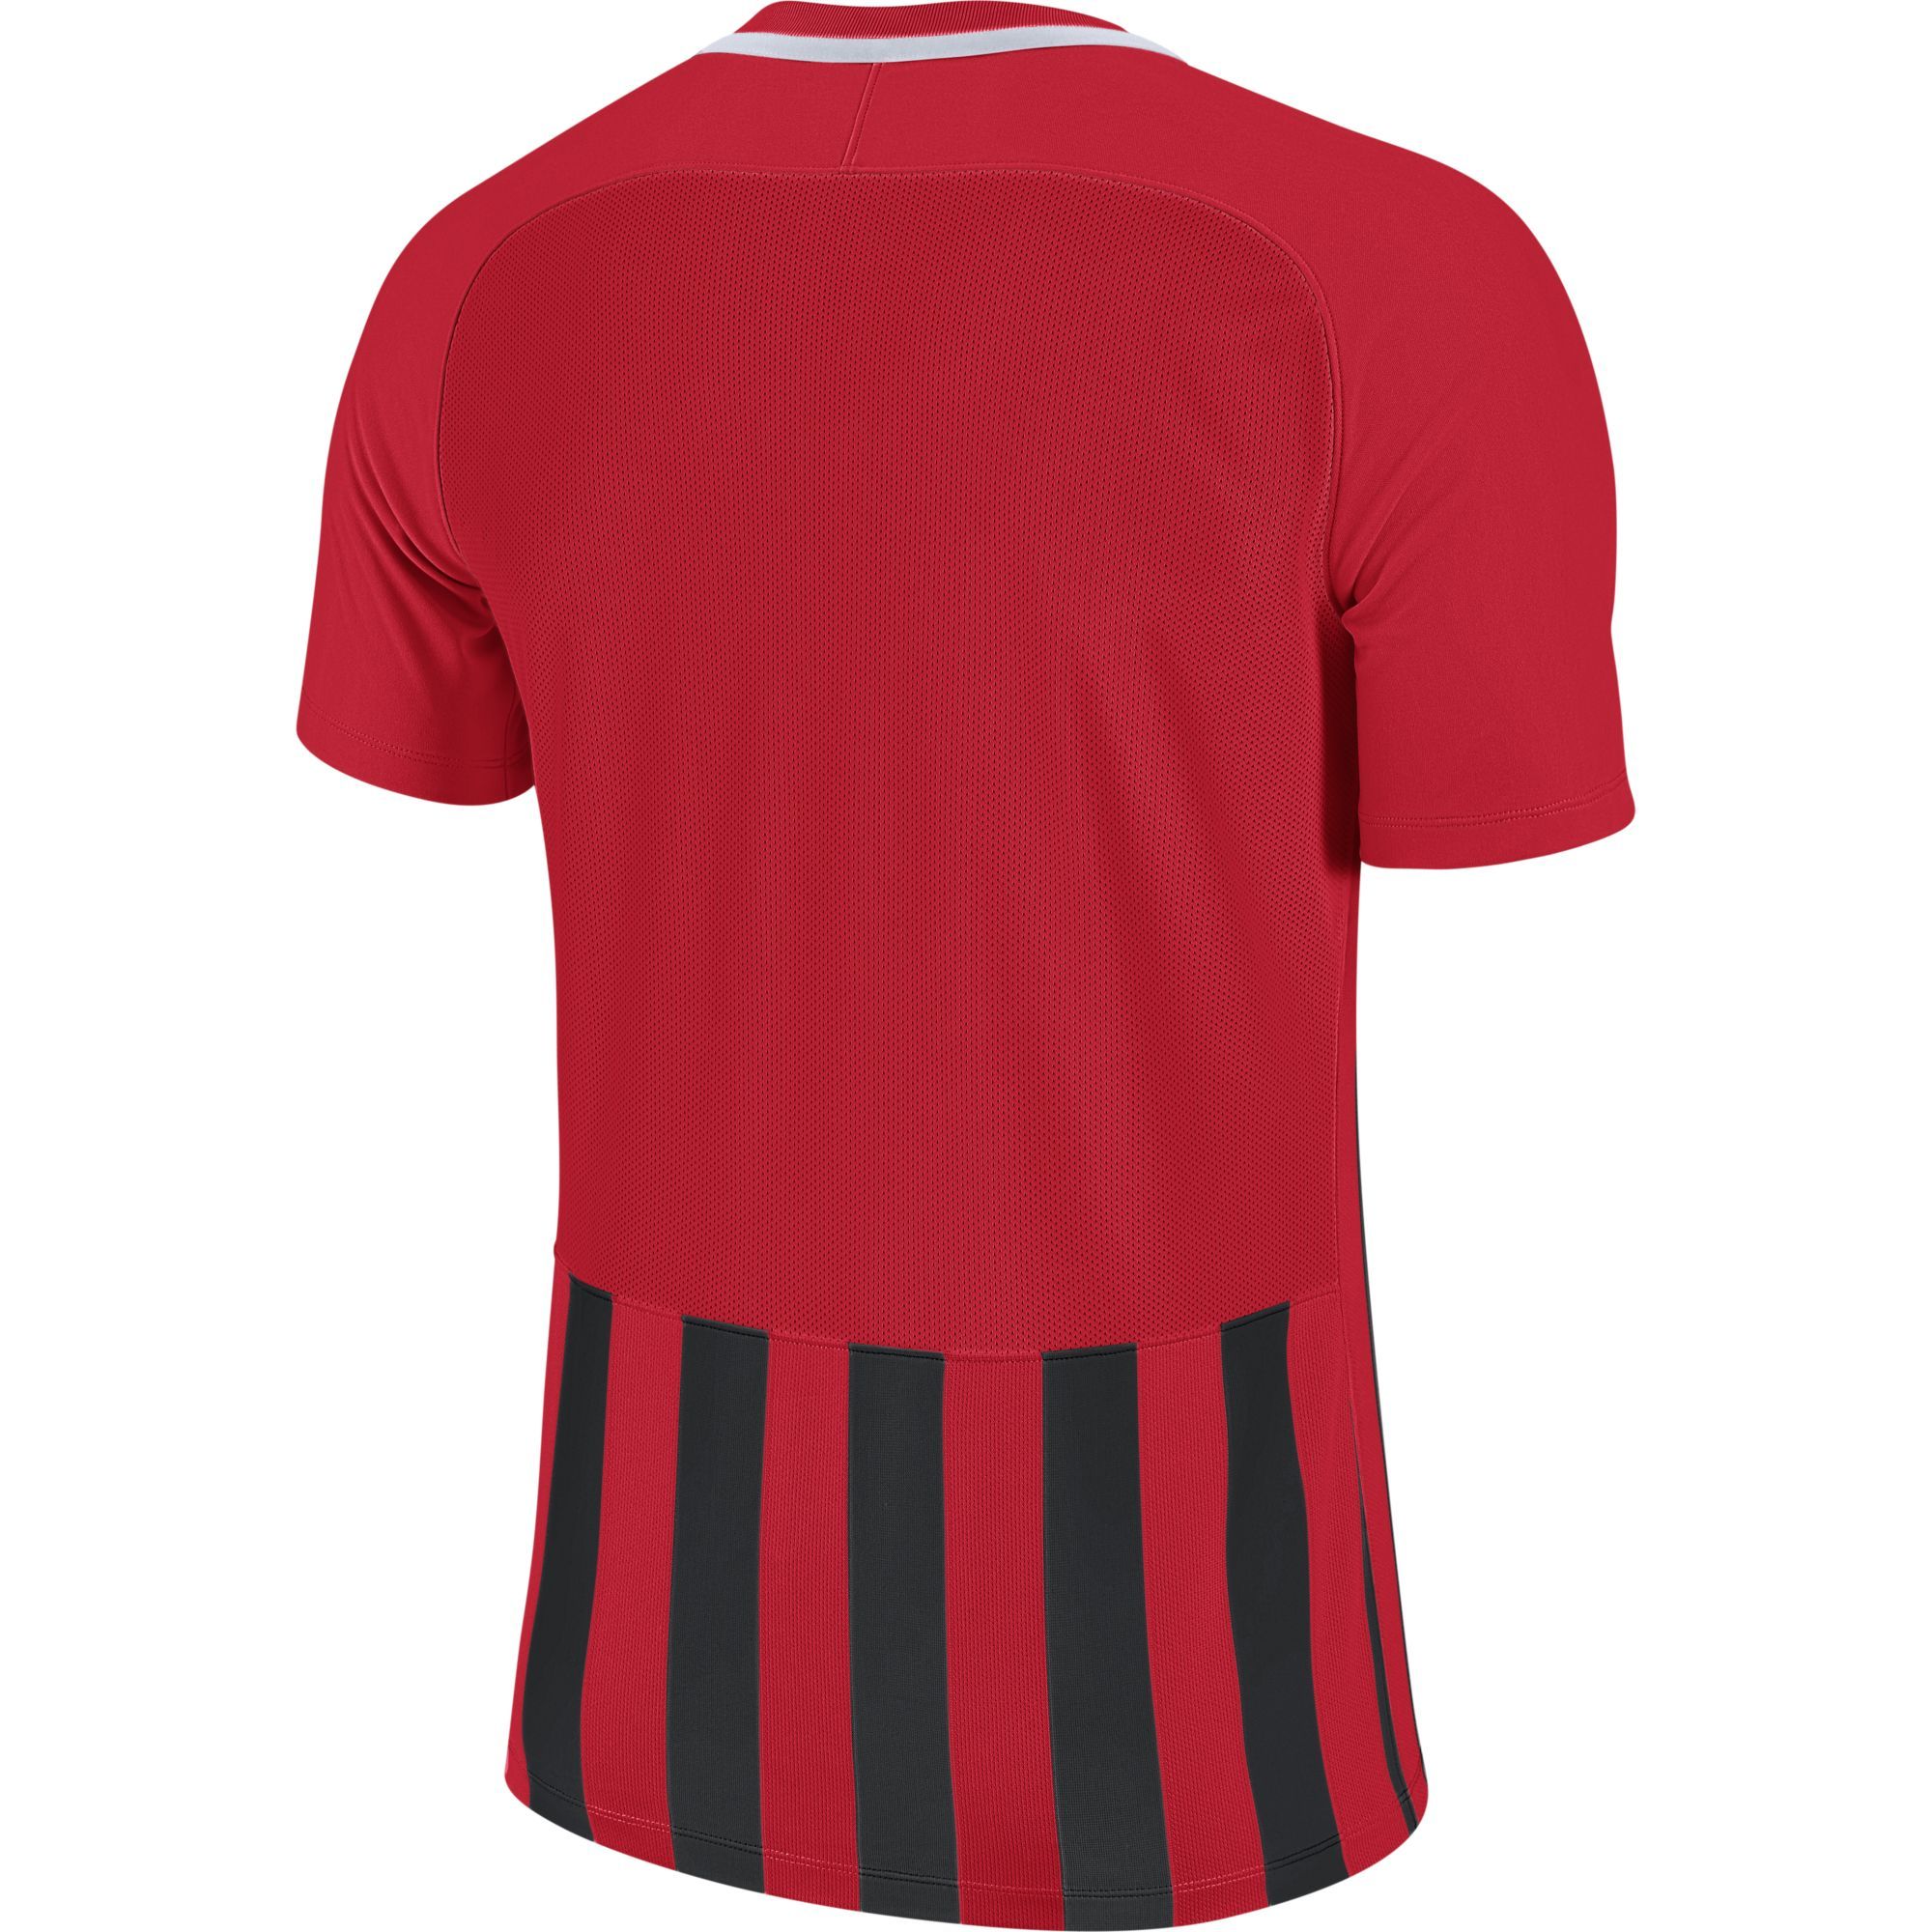 NIKE - Camiseta roja 8U7065-U10 Niño